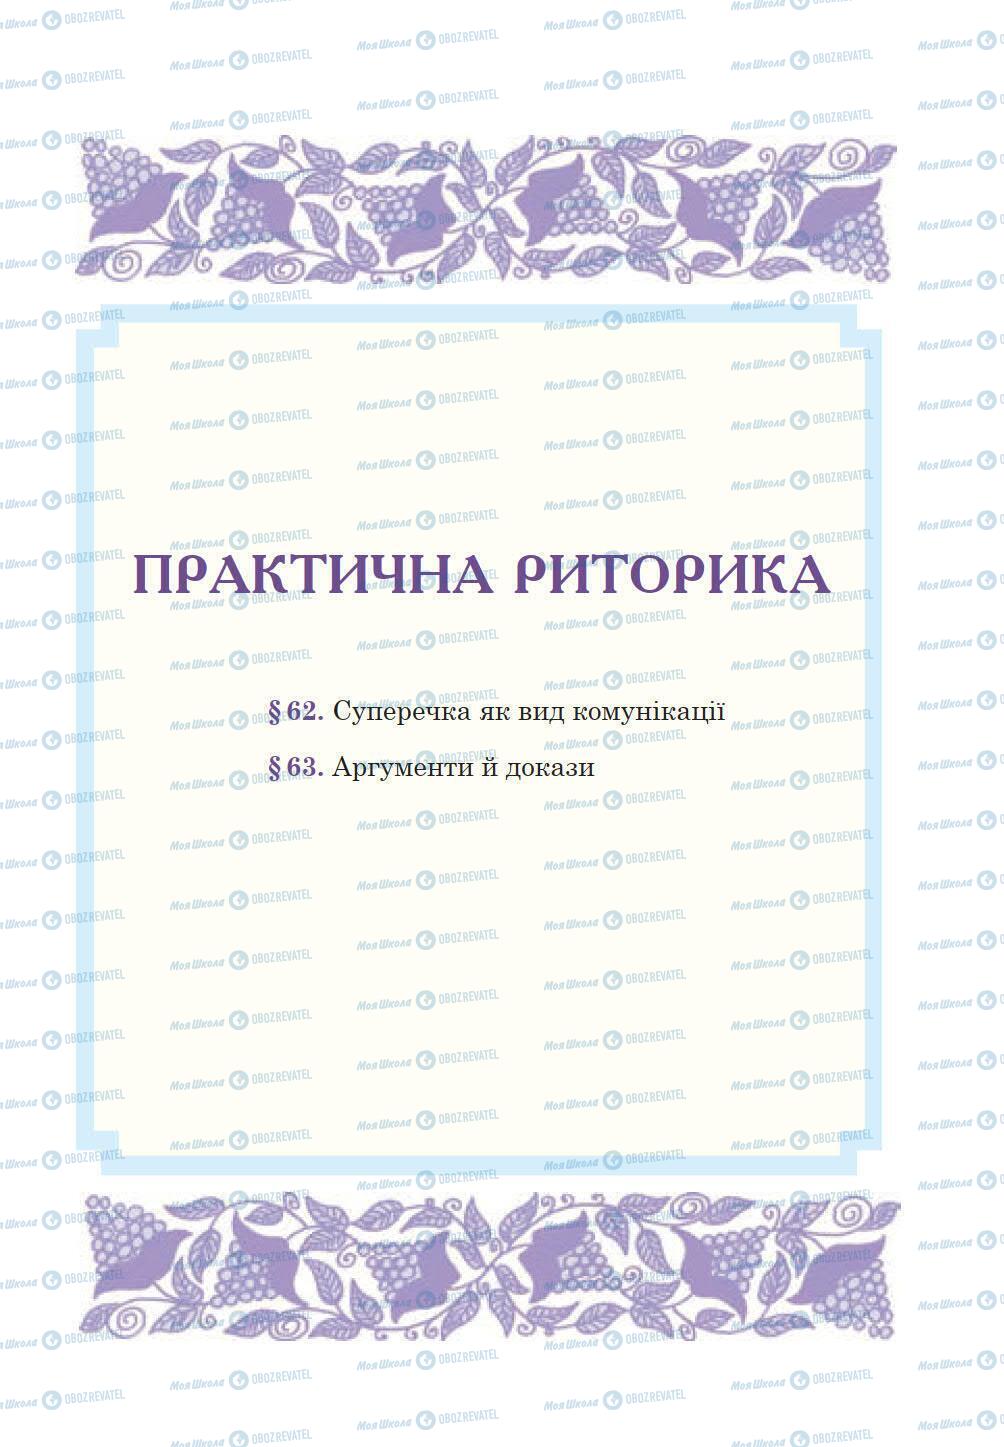 Учебники Укр мова 10 класс страница 197